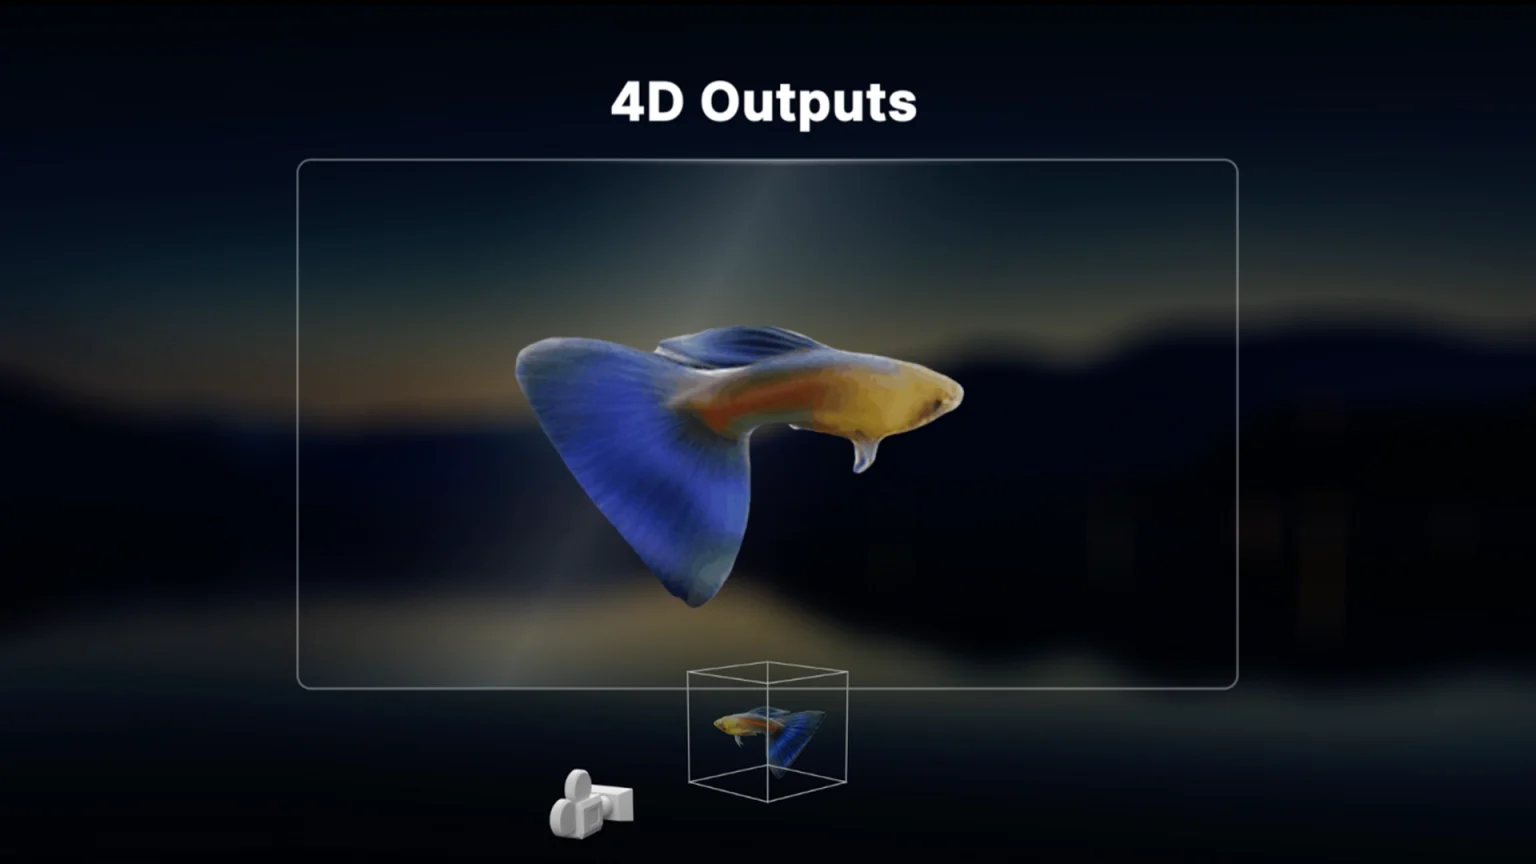 Stability AI, 4D video oluşturma modeli Stable Video 4D'yi tanıttı